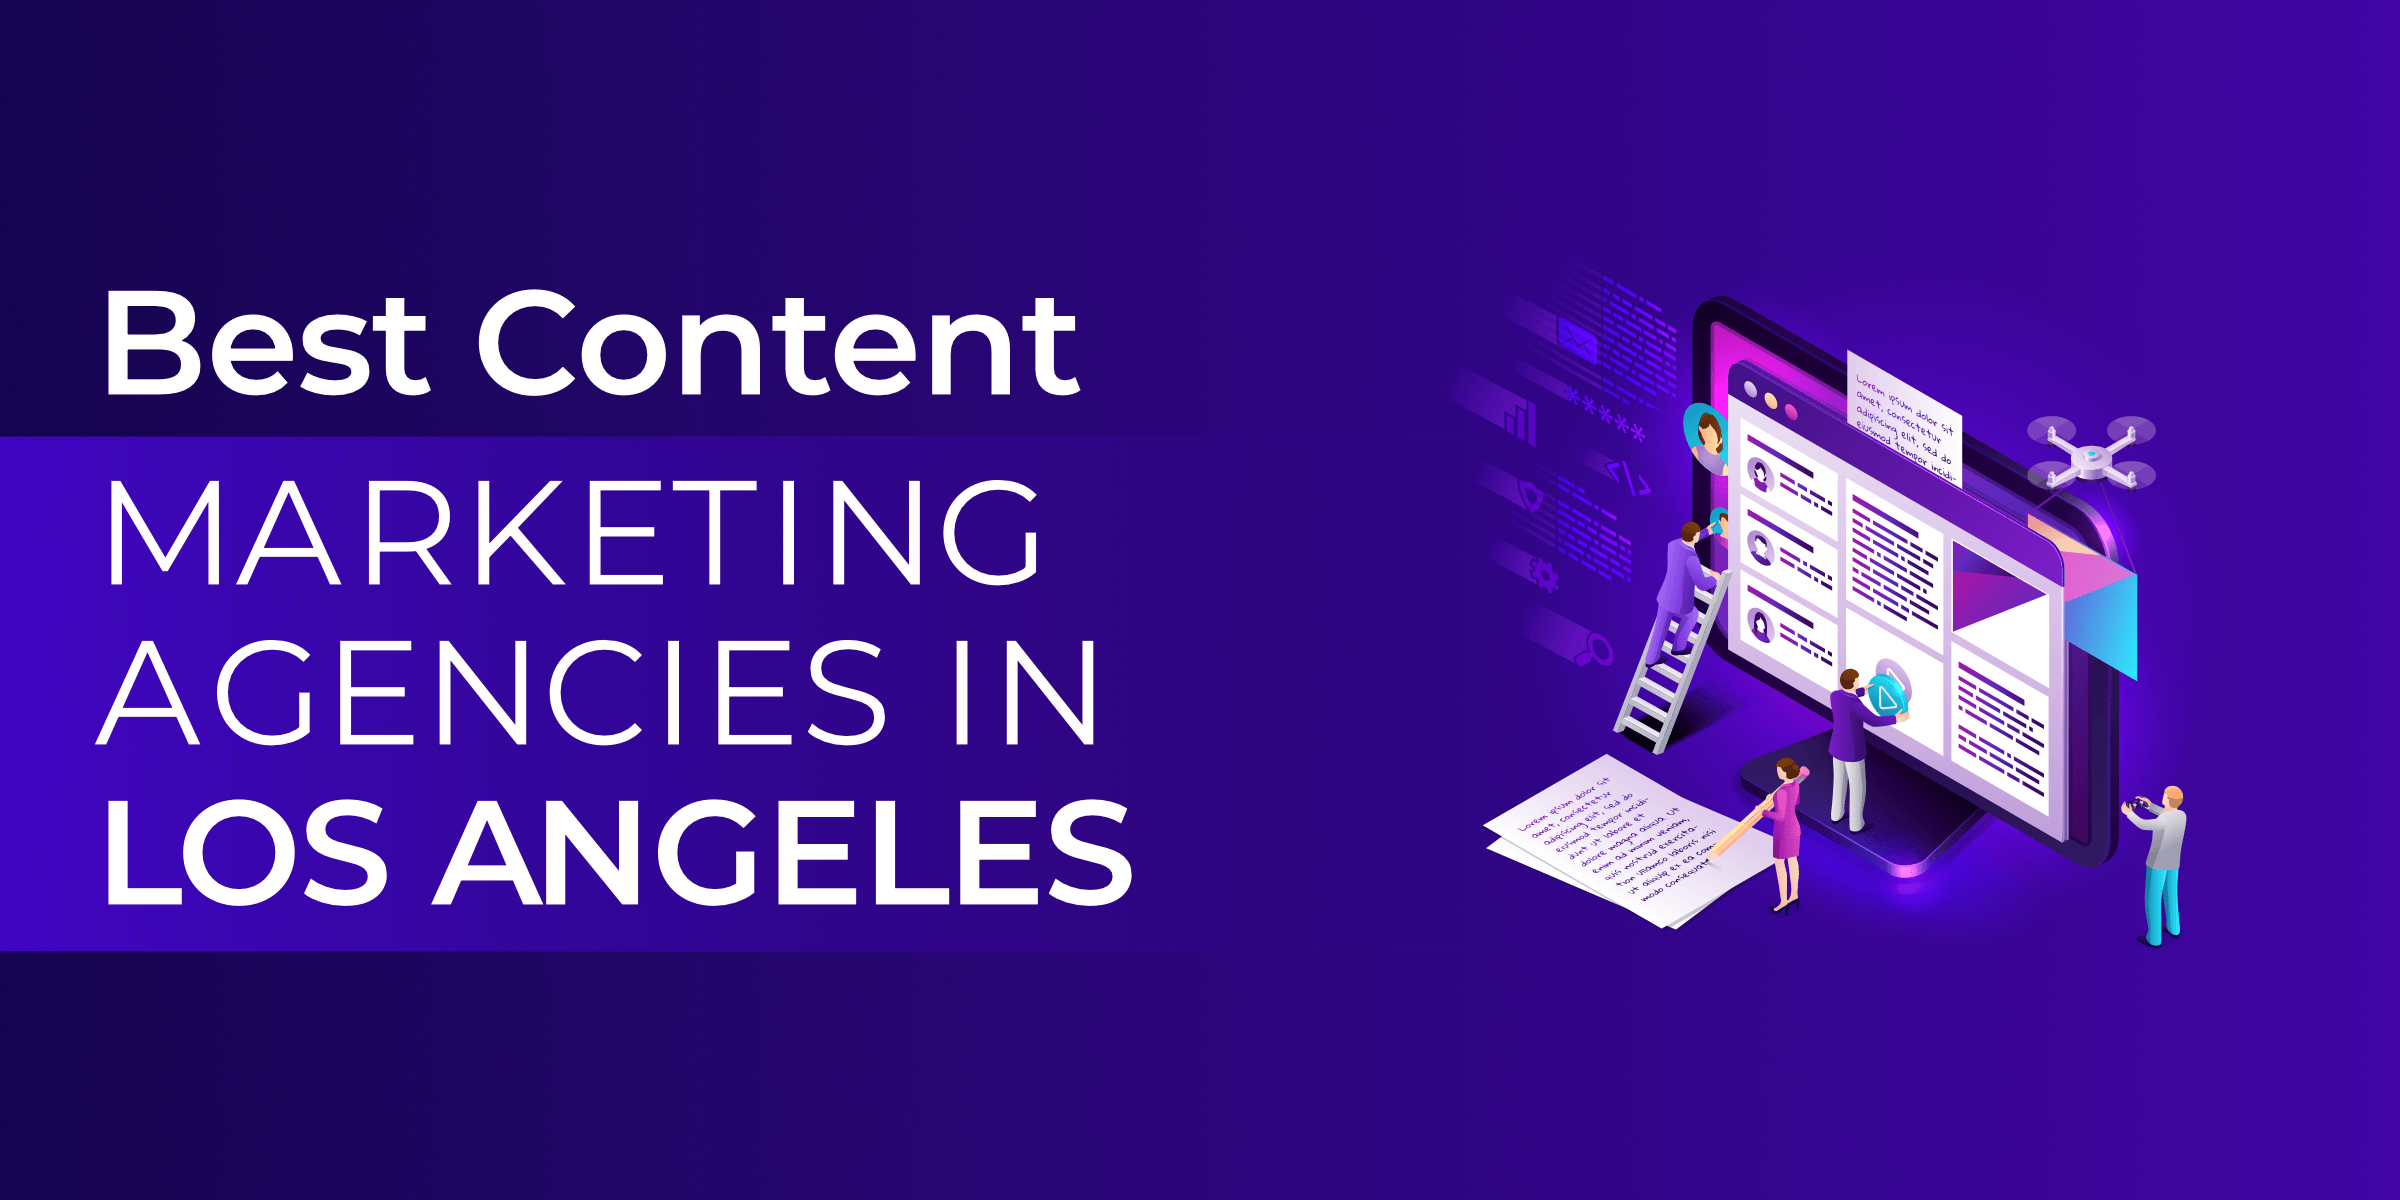 Best Content Marketing Agencies in Los Angeles